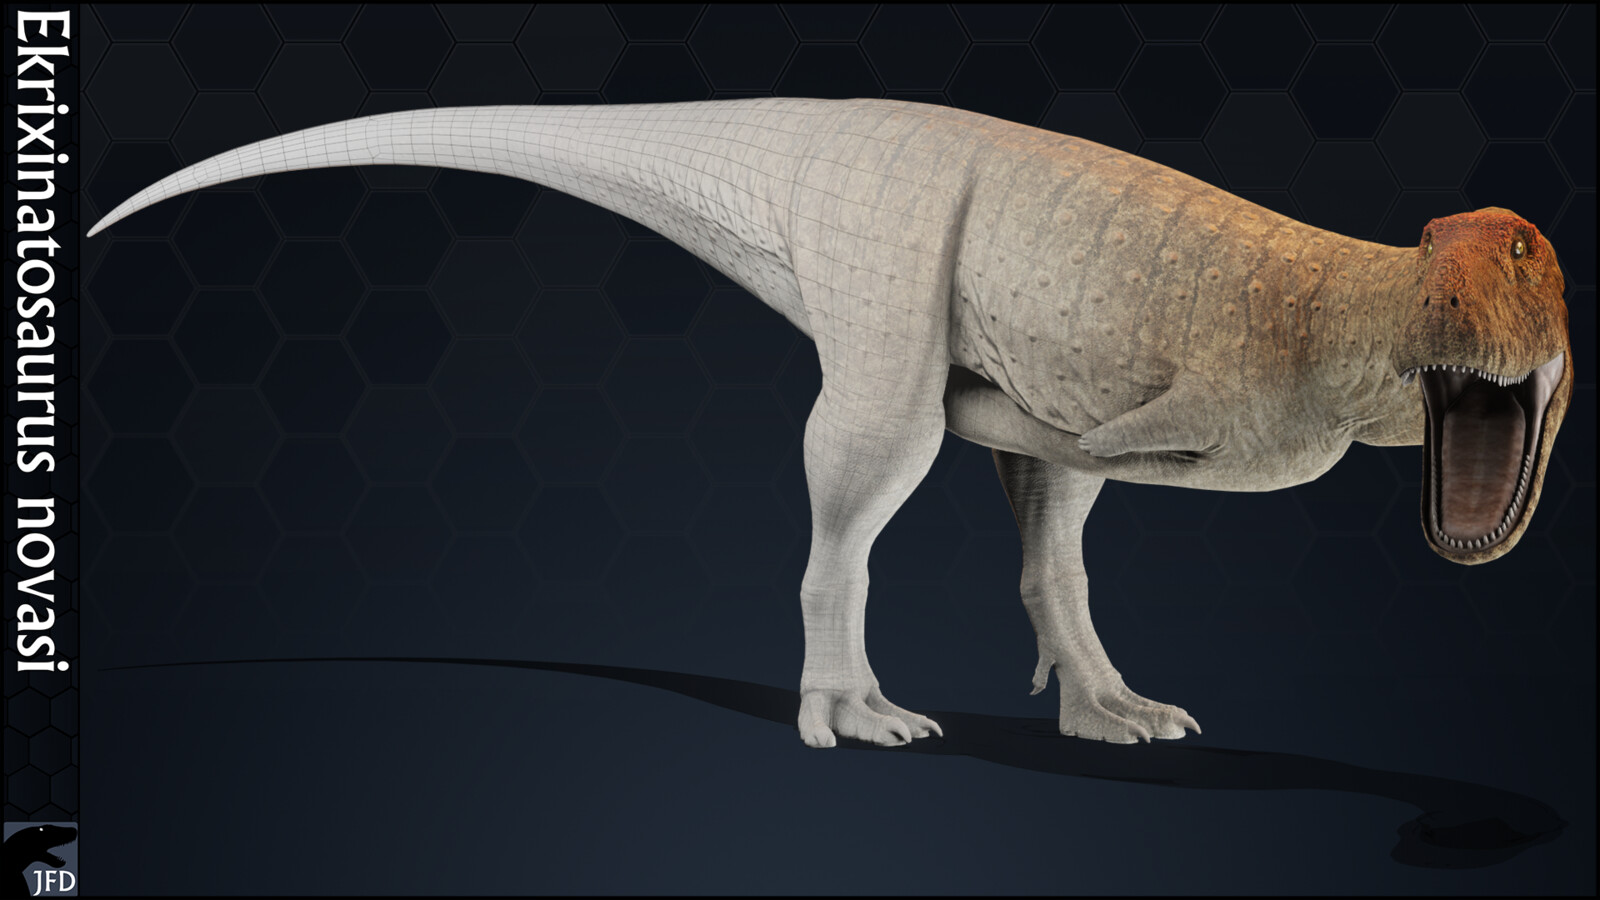 Ekrixinatosaurus novasi full body, normal map and wireframe render.